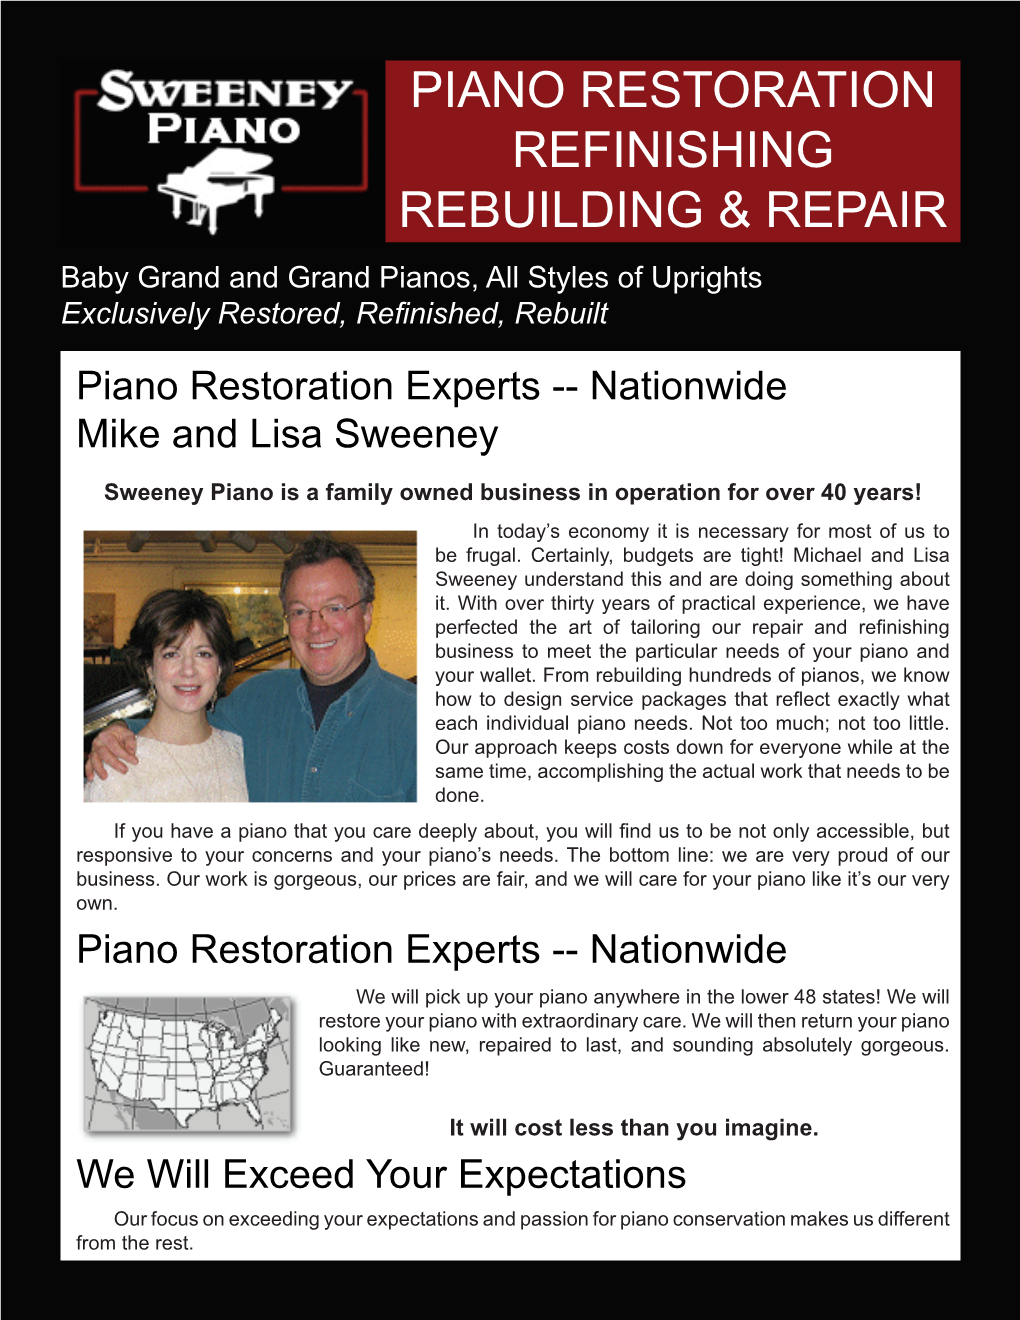 Piano Restoration Refinishing Rebuilding & Repair